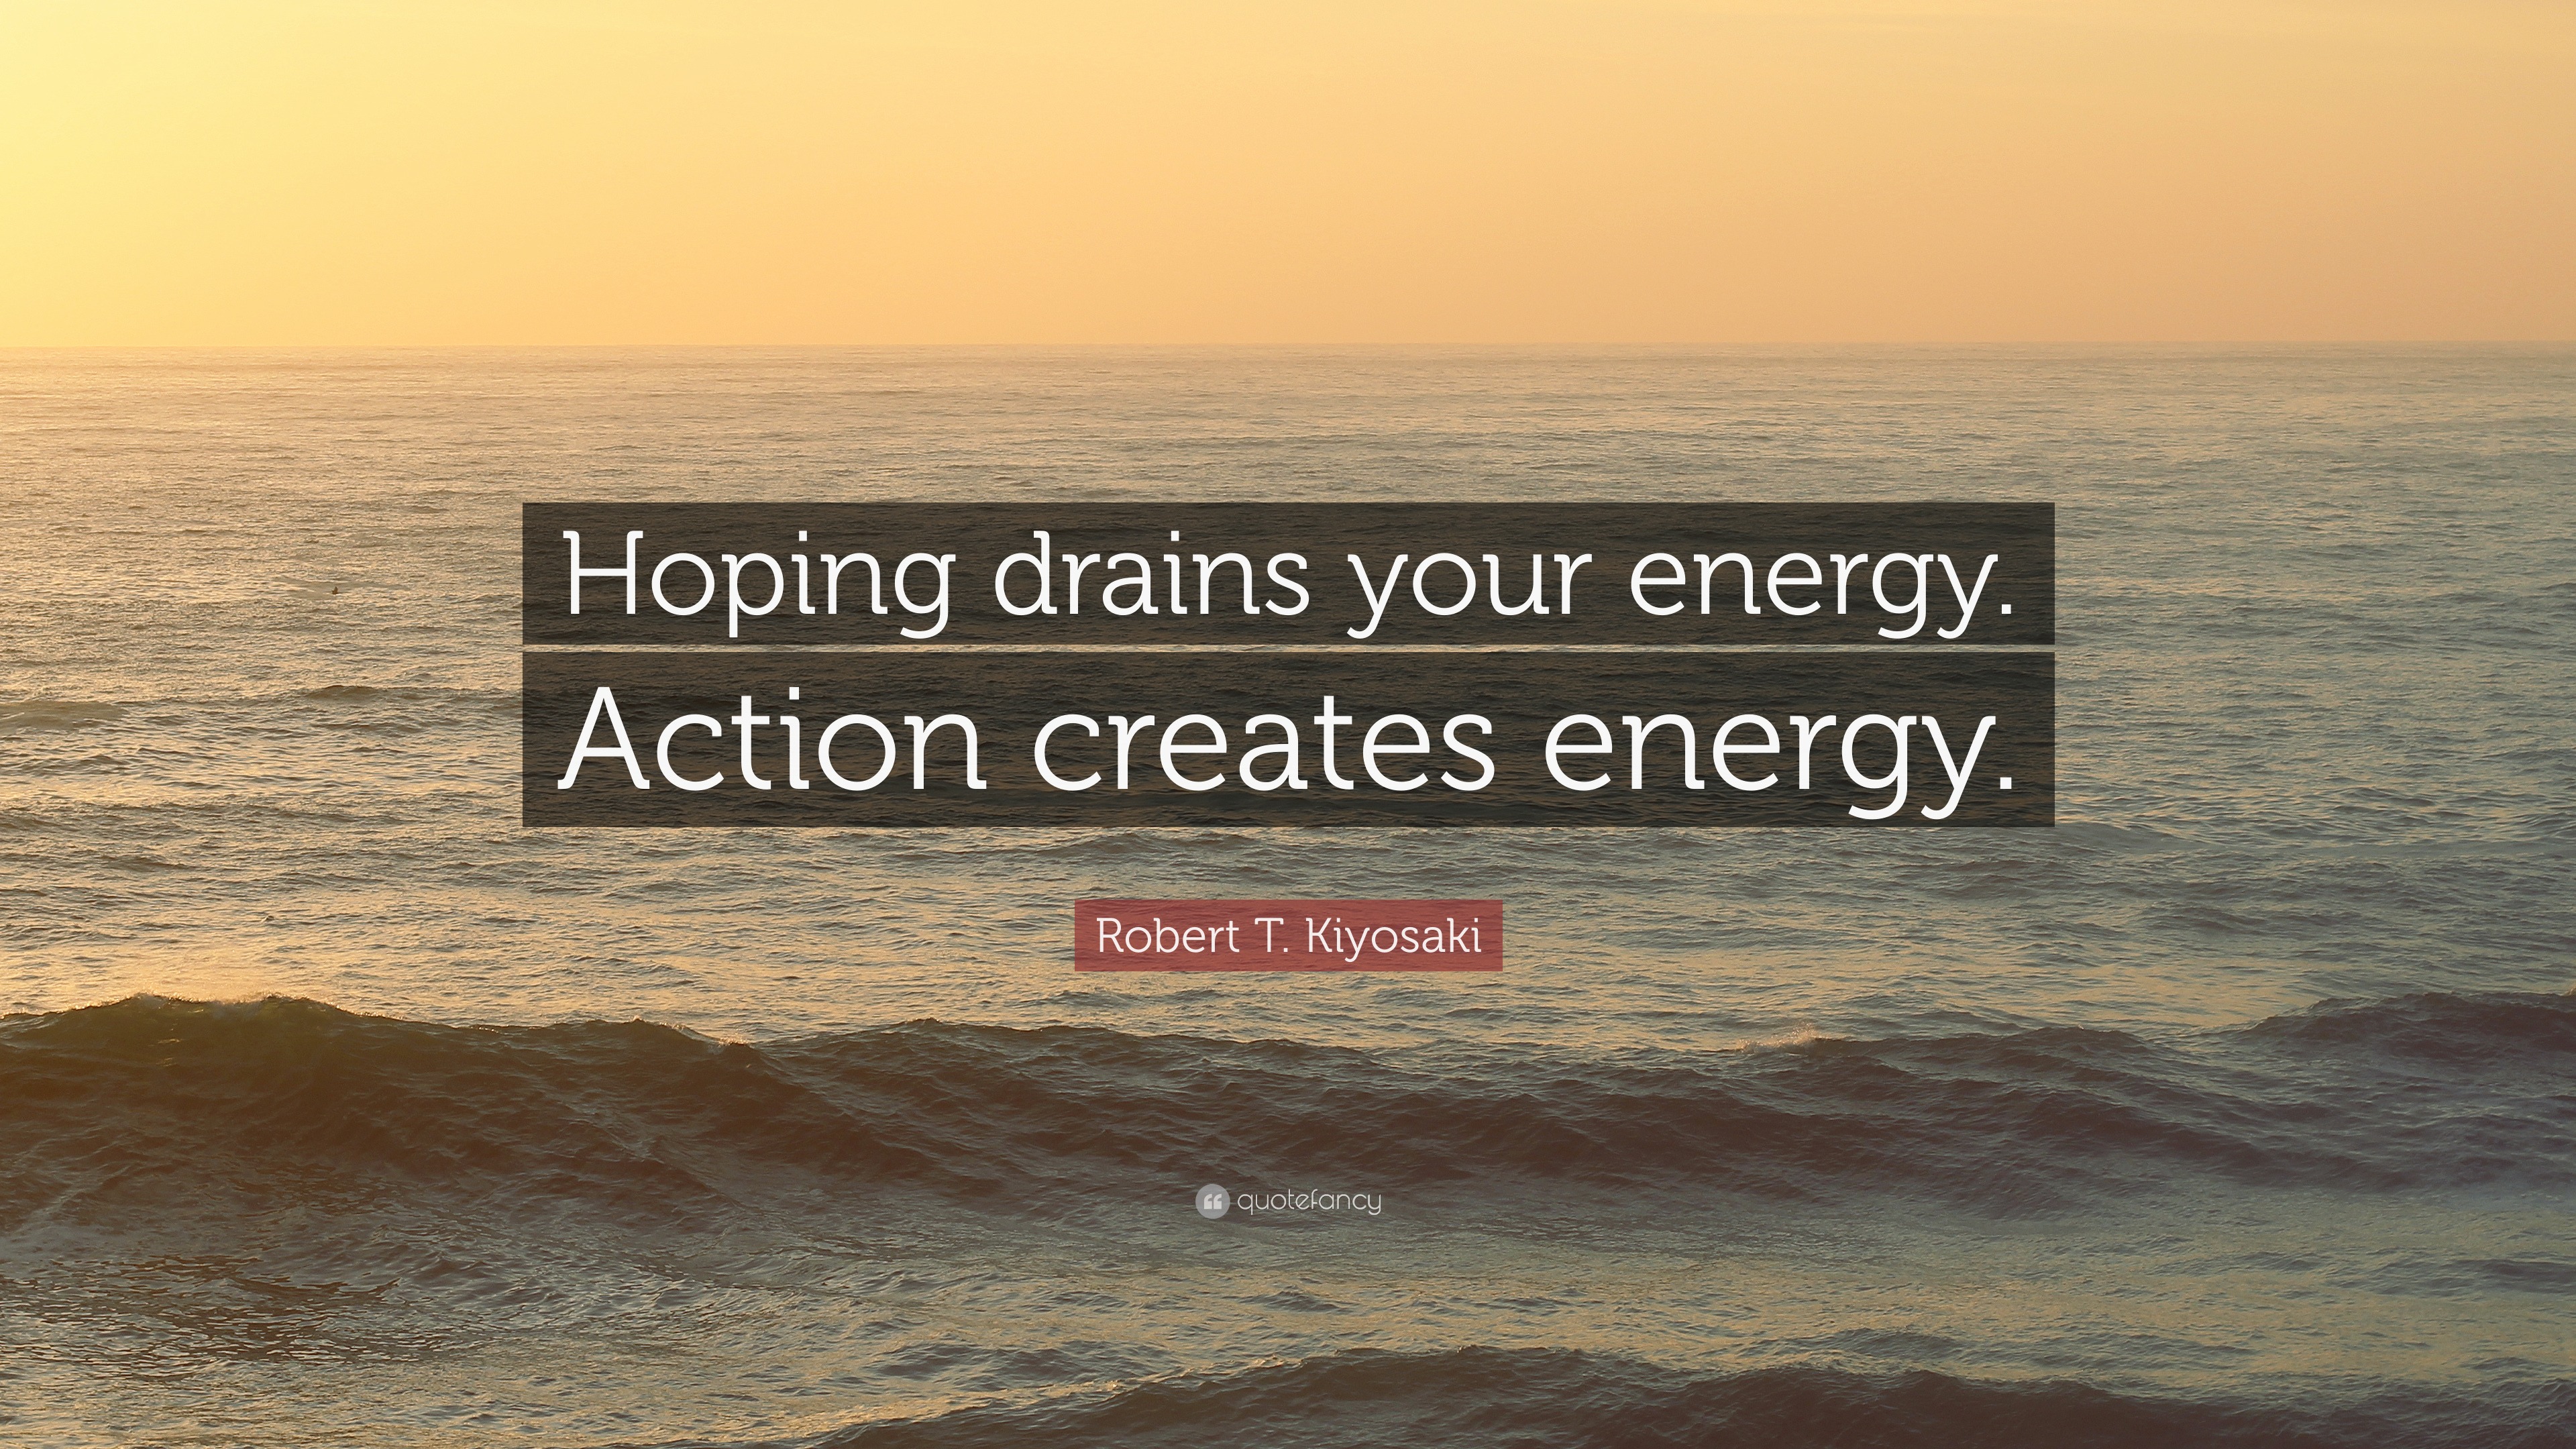 robert-t-kiyosaki-quote-hoping-drains-your-energy-action-creates